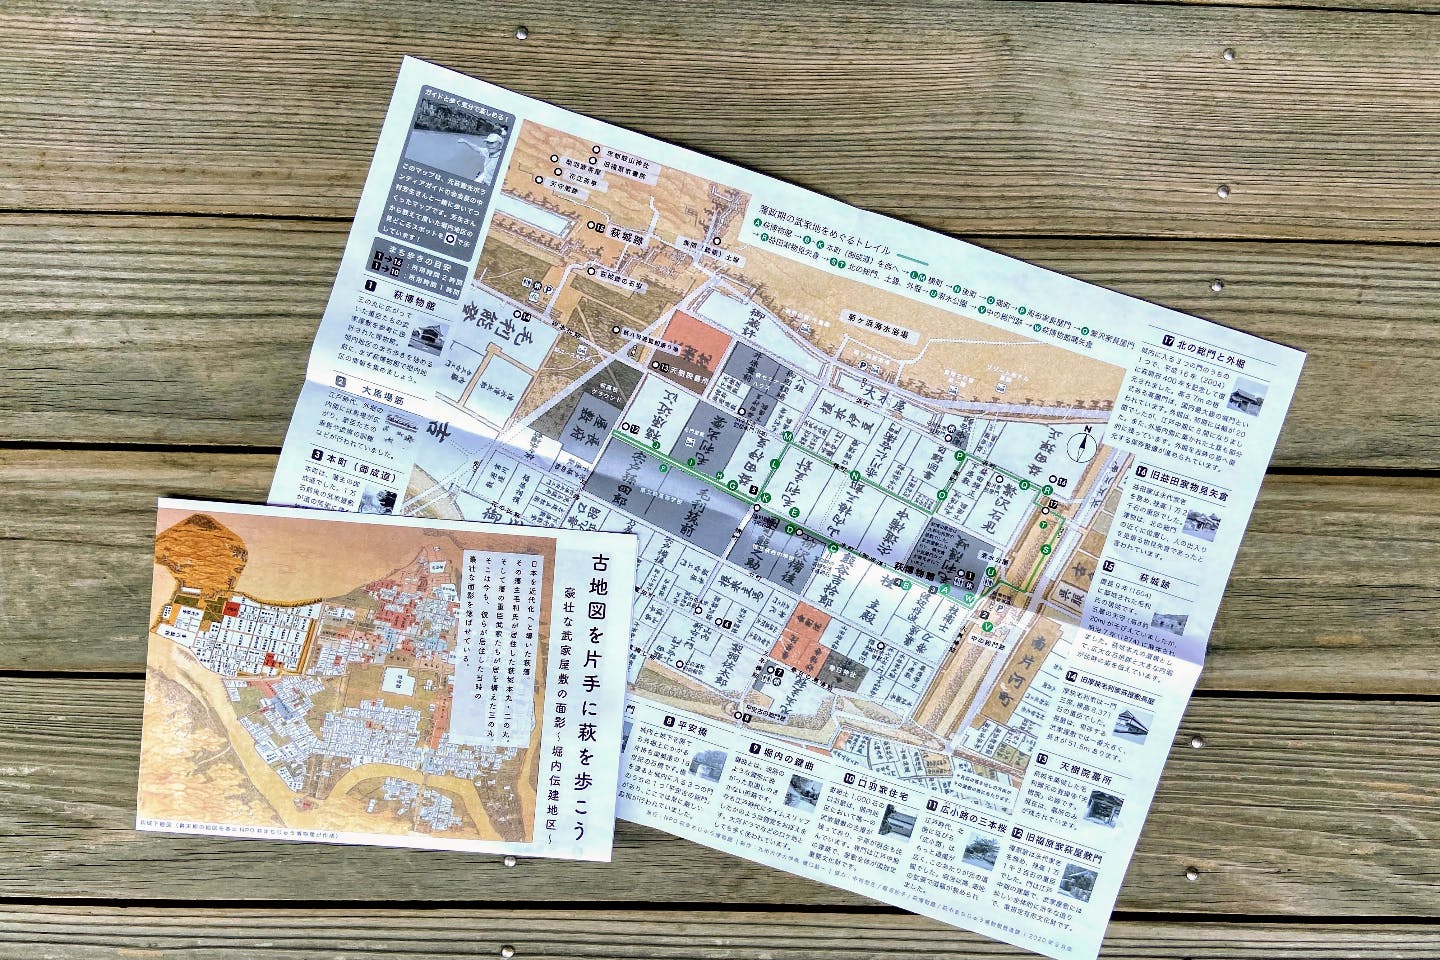 昭和11年 萩市観光協会[伸び行く萩市の横顔]市街図略図/商業広告 - 本、雑誌